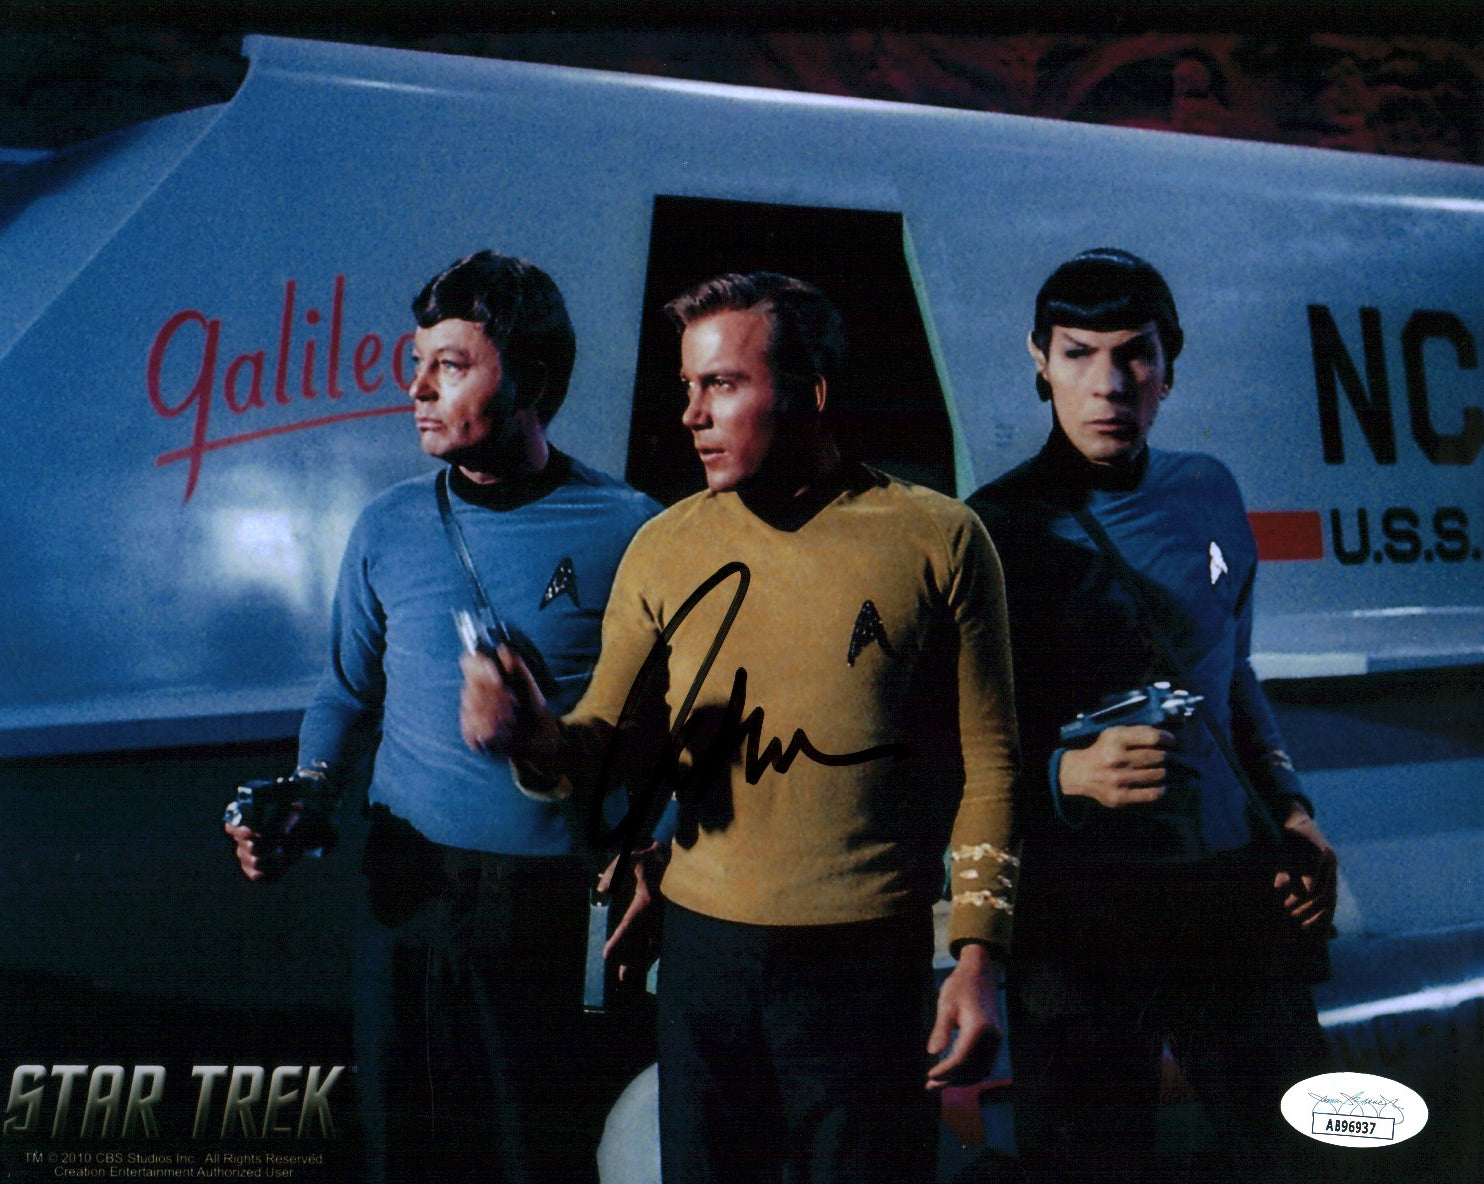 William Shatner Star Trek 8x10 Signed Photo JSA COA Certified Autograph